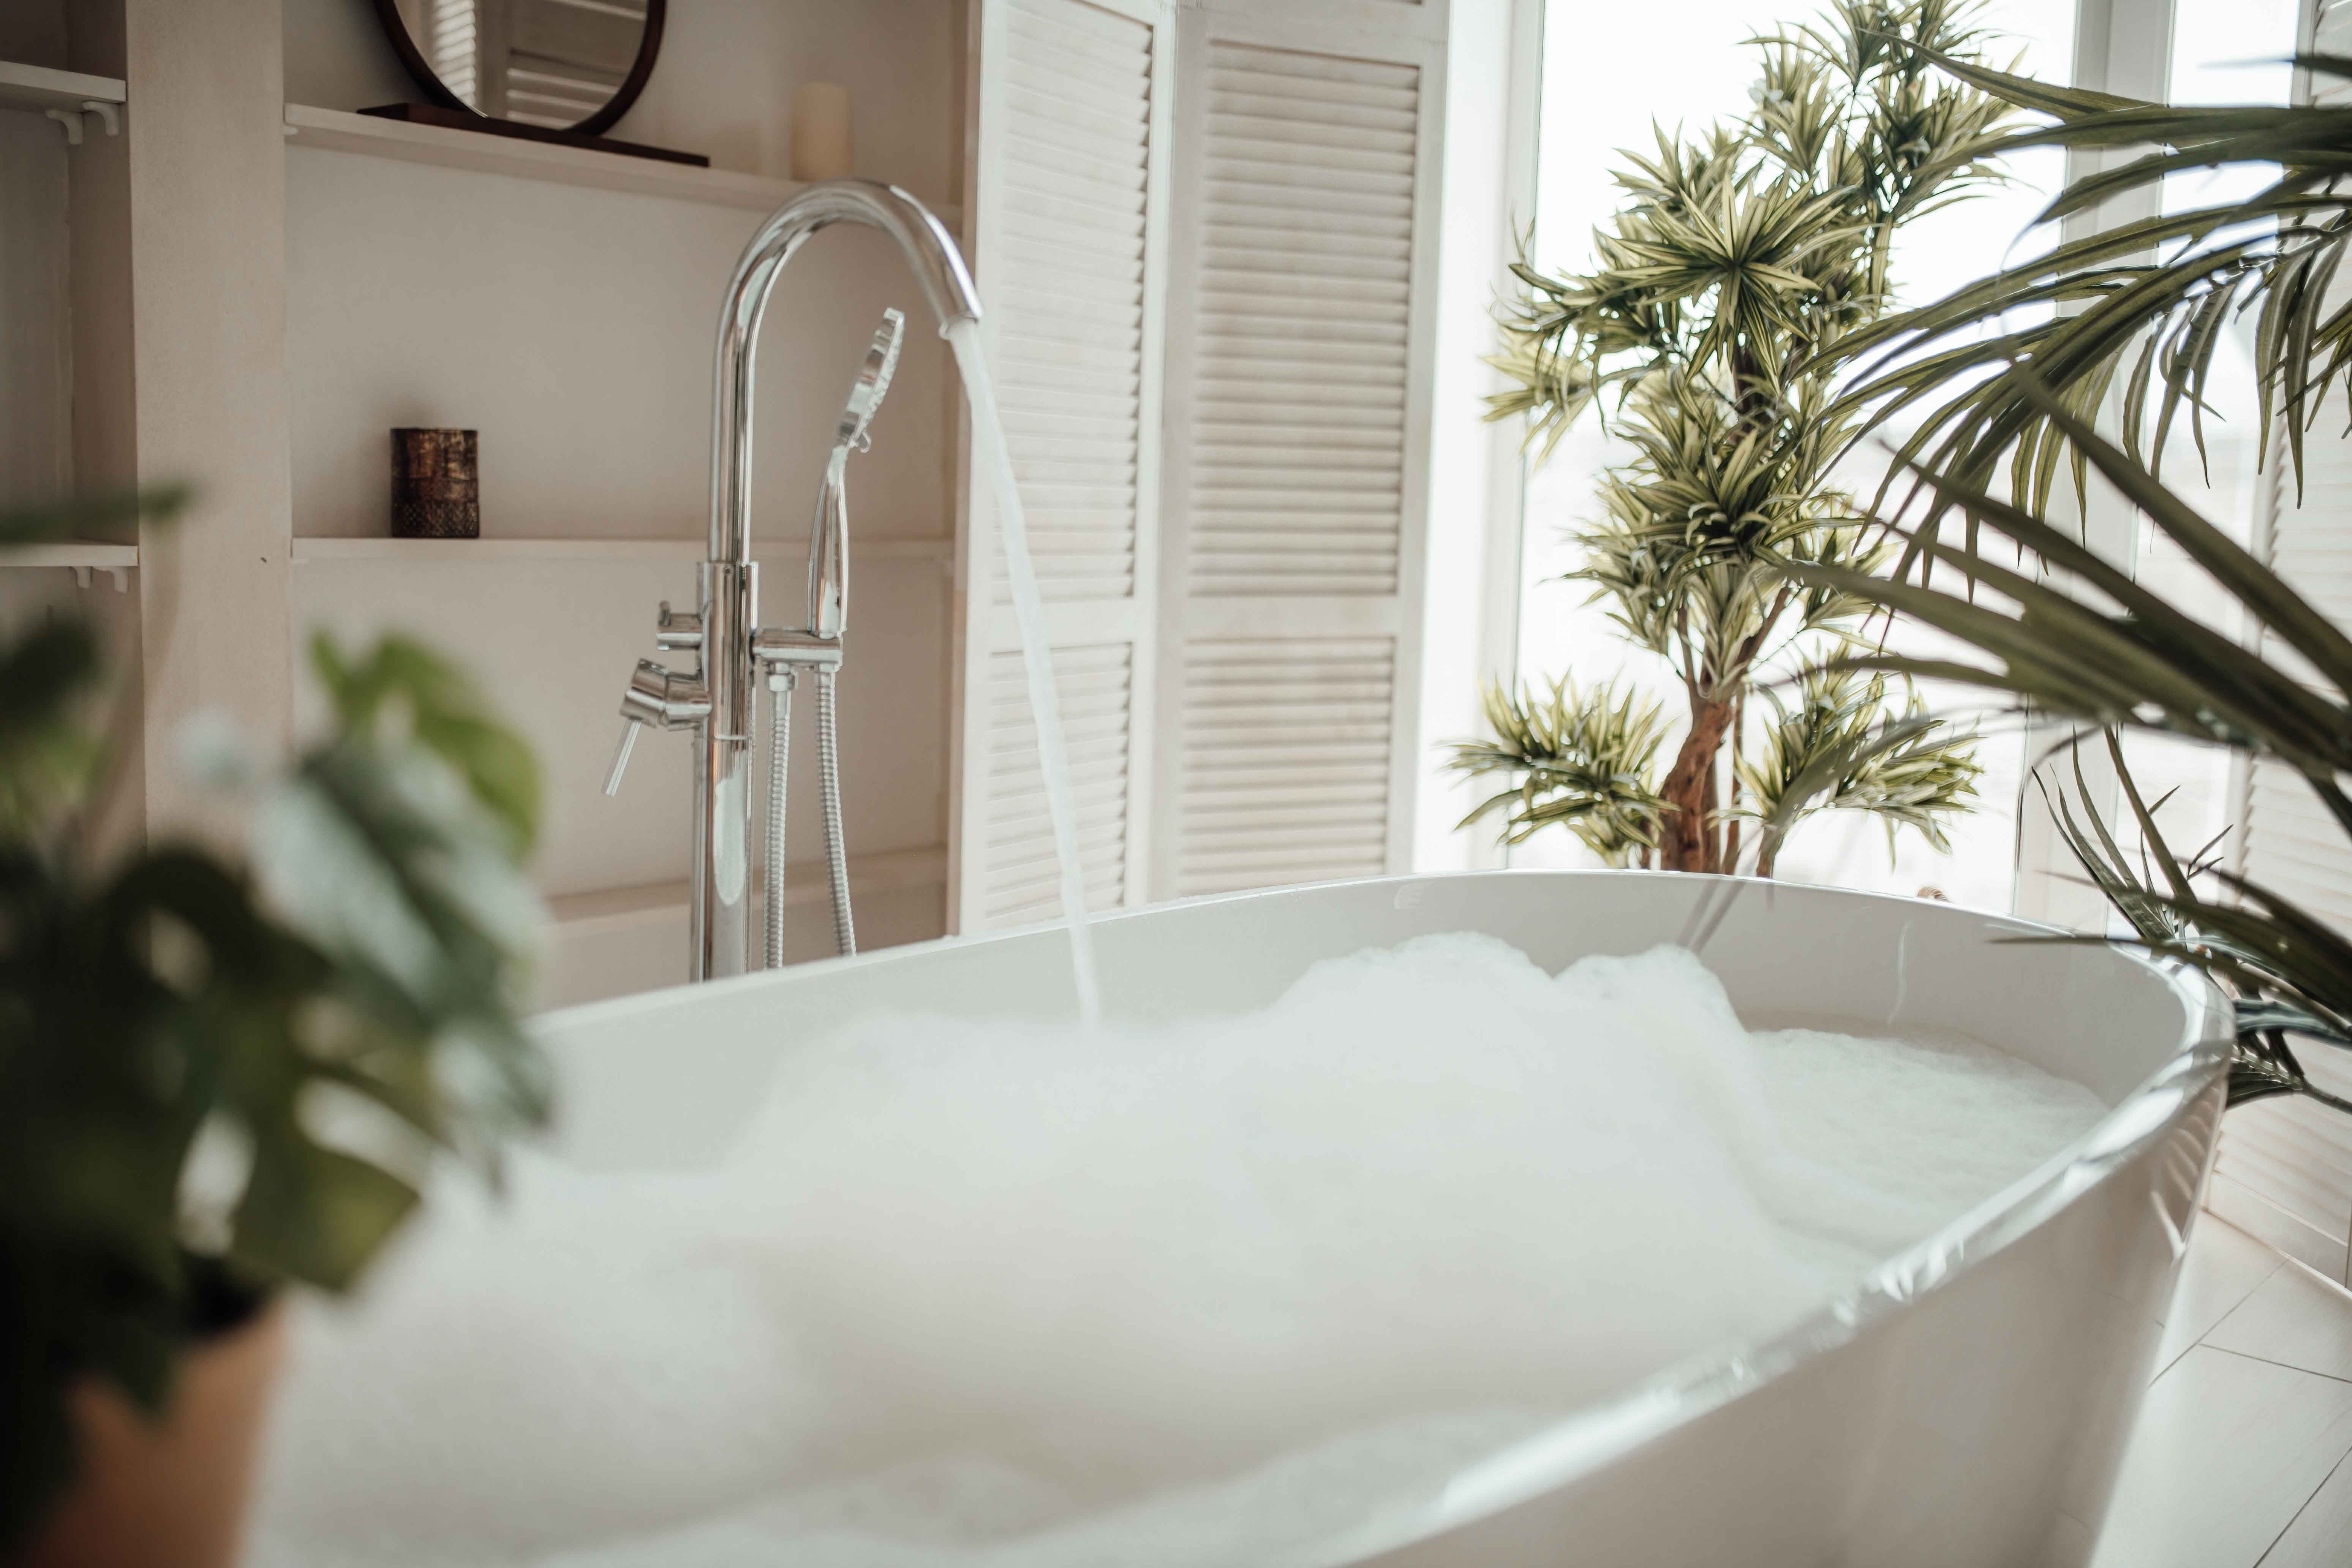 10 Bath Remodeling Ideas With Stylish Decor